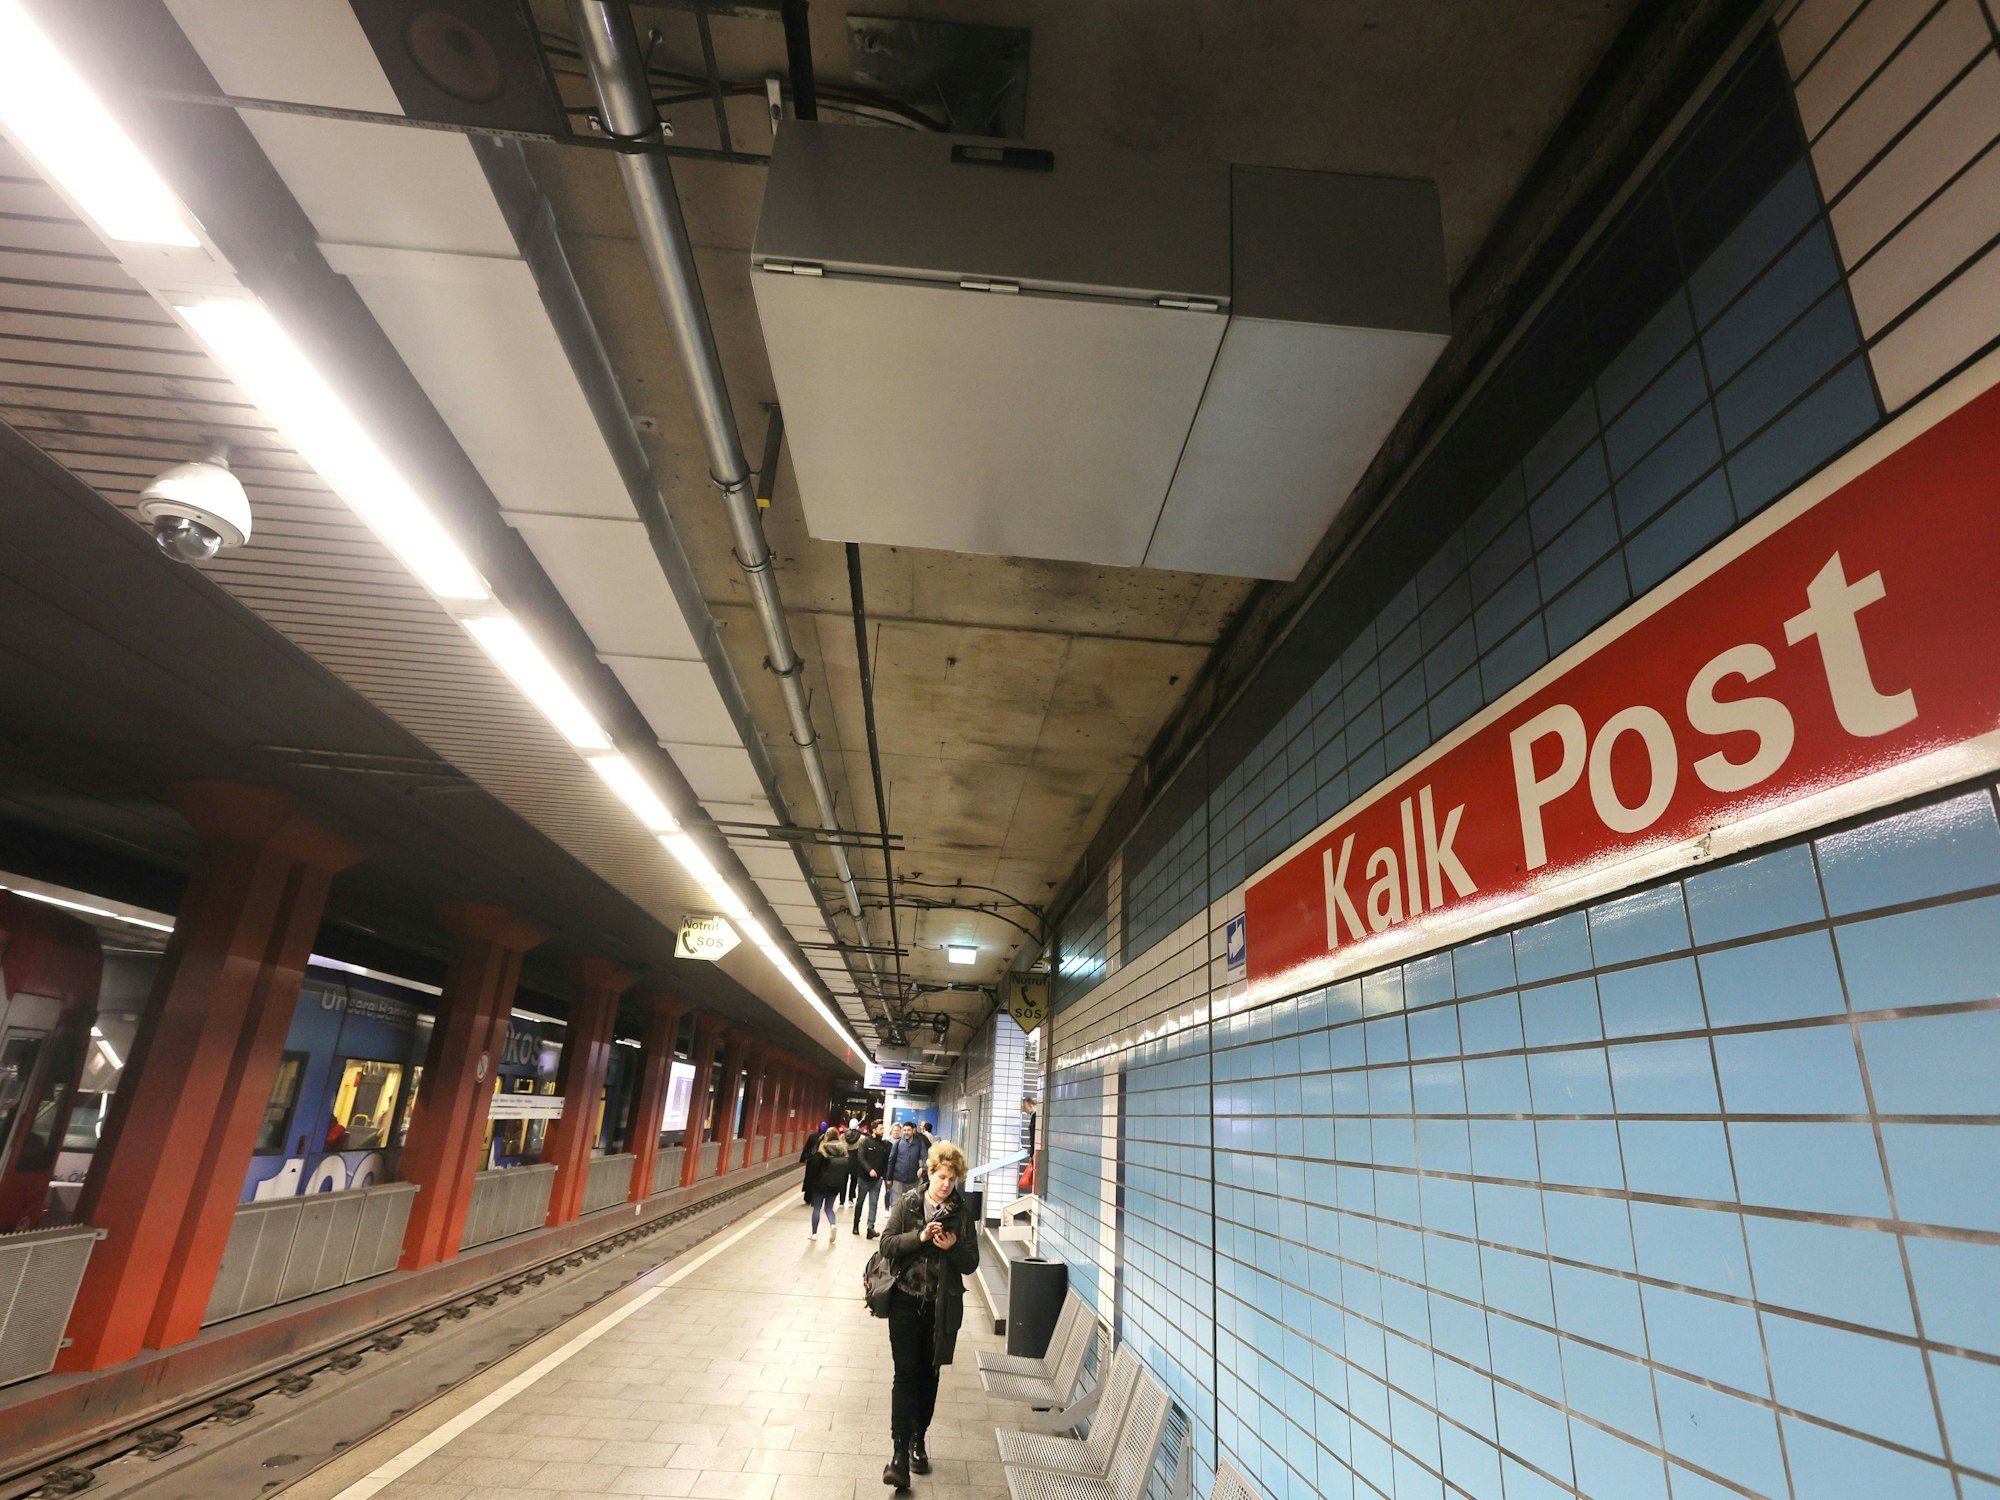 U-Bahn-Haltestelle Kalk Post 